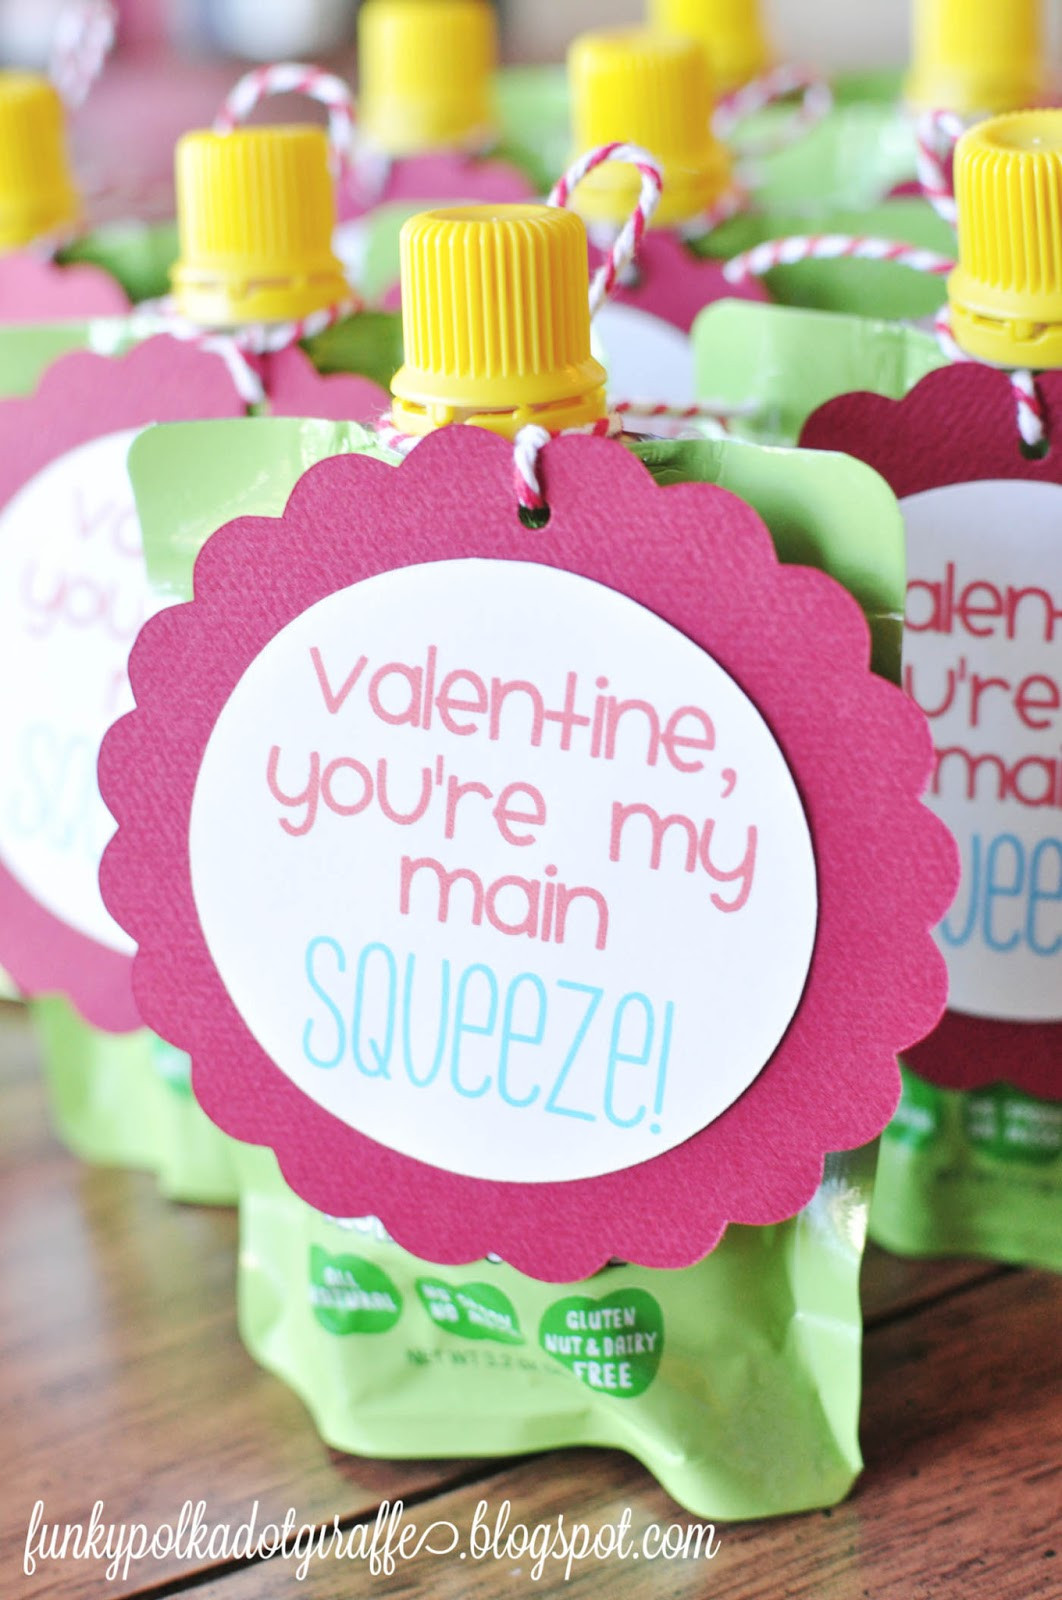 Daycare Valentine Gift Ideas
 Funky Polkadot Giraffe Preschool Valentines You re My